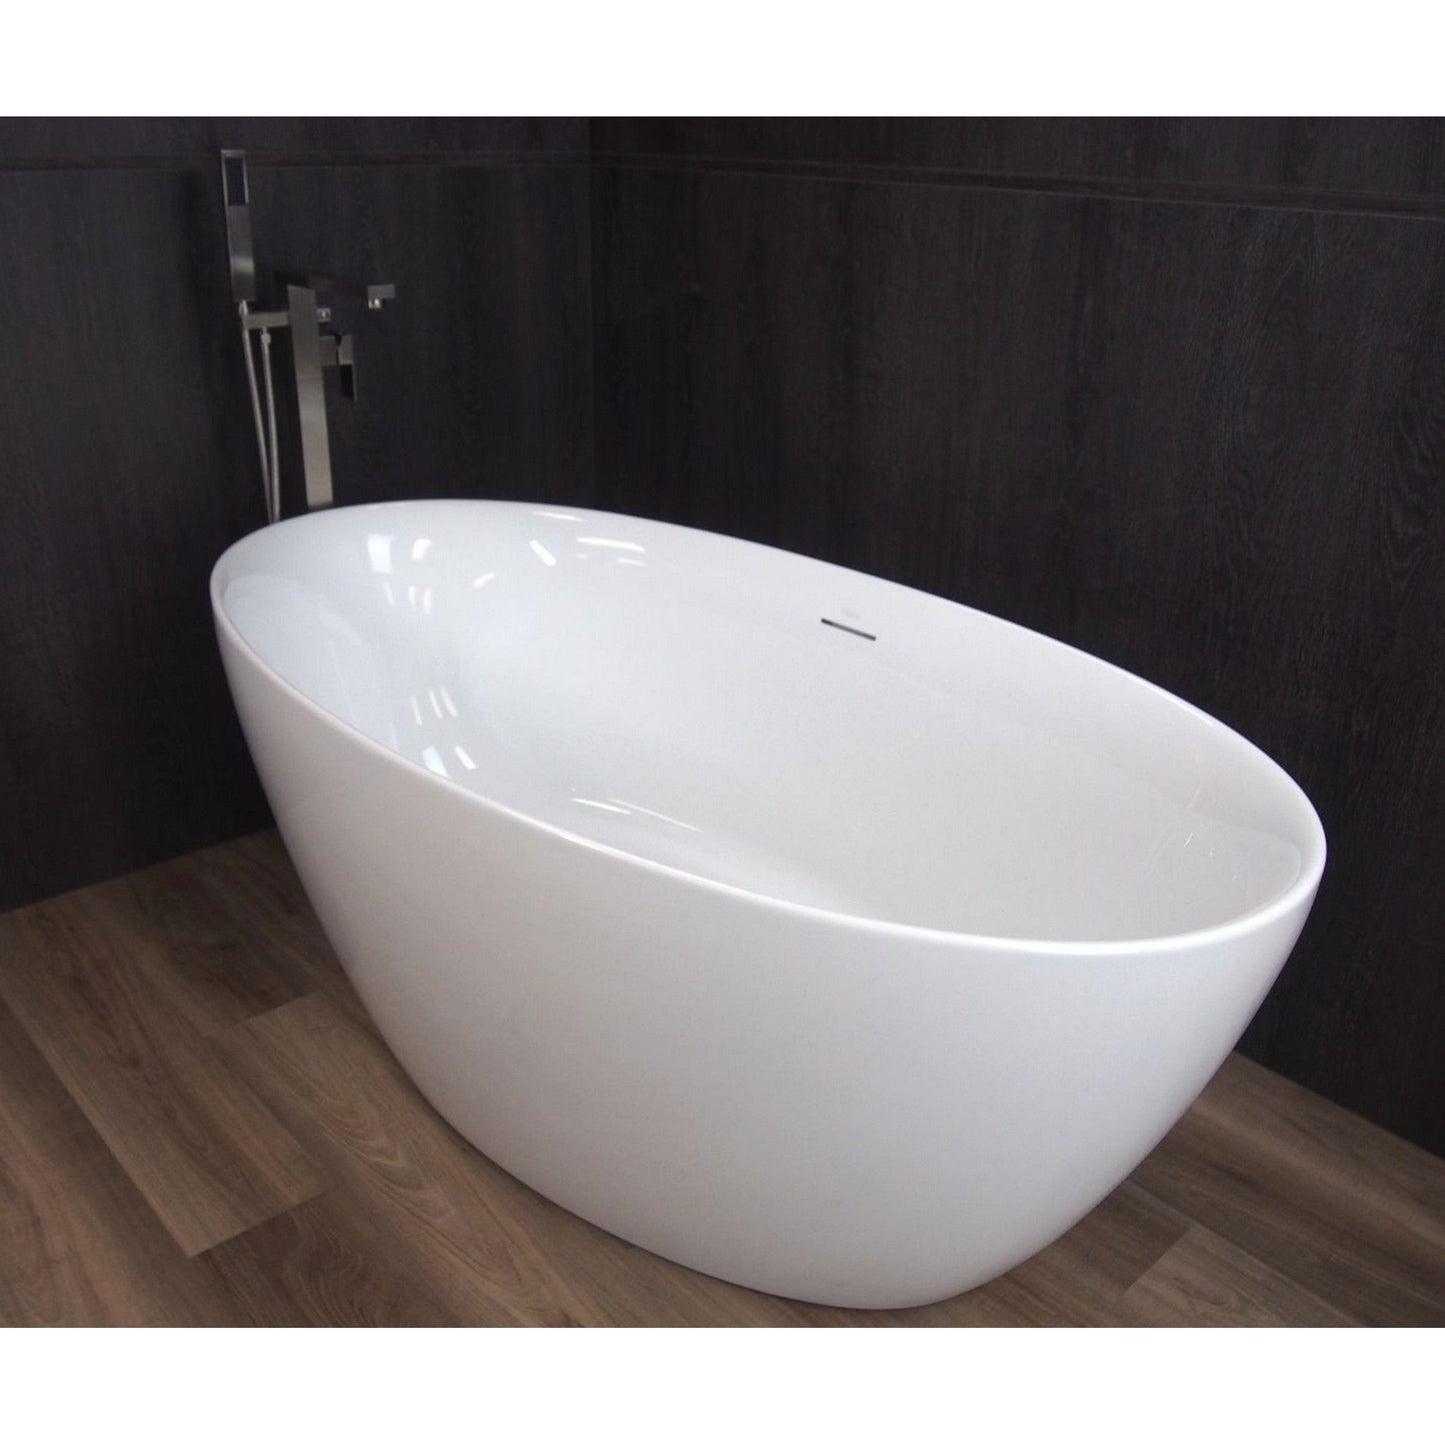 Ratel 67" x 33" Oval White Gloss Acrylic Freestanding Bathtub